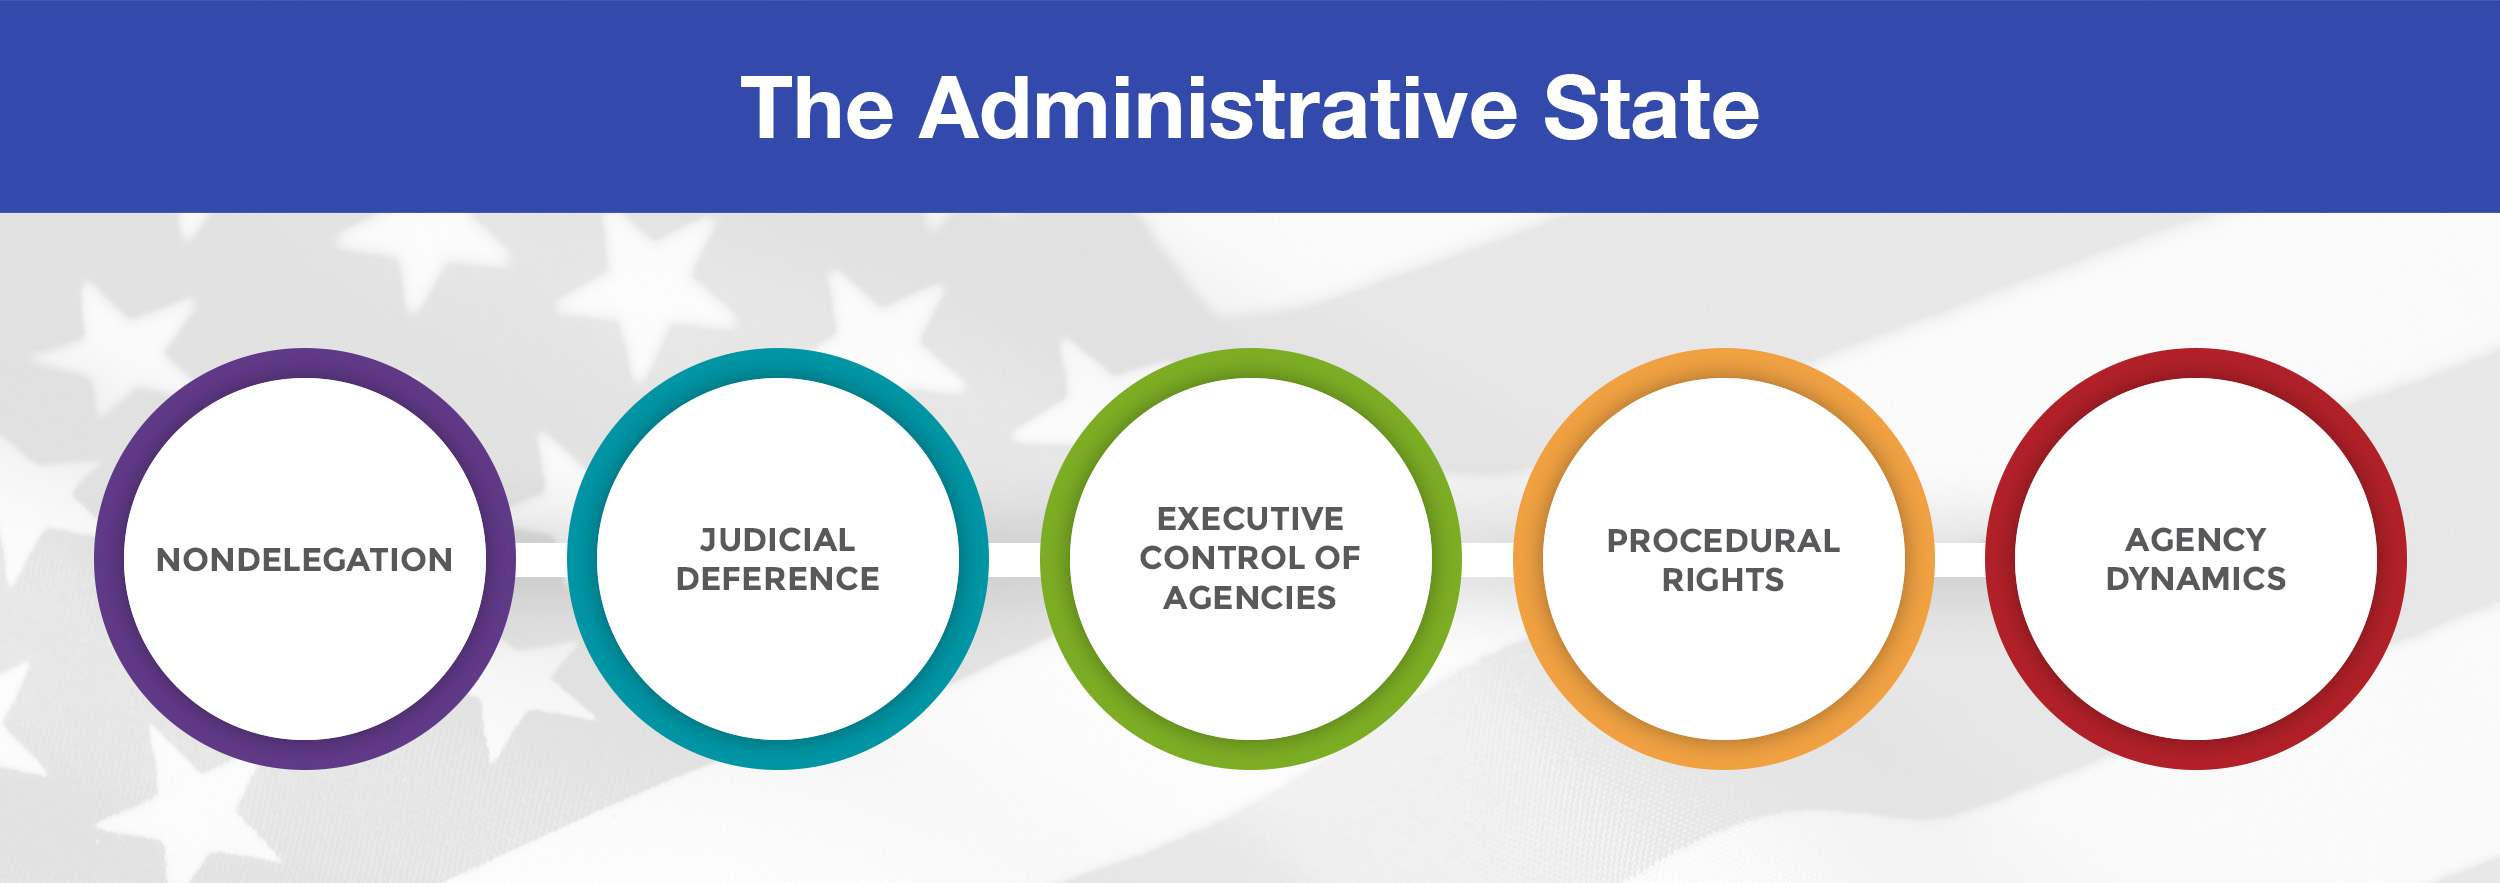 Administrative State Banner - Circle Graphic - V2.jpg